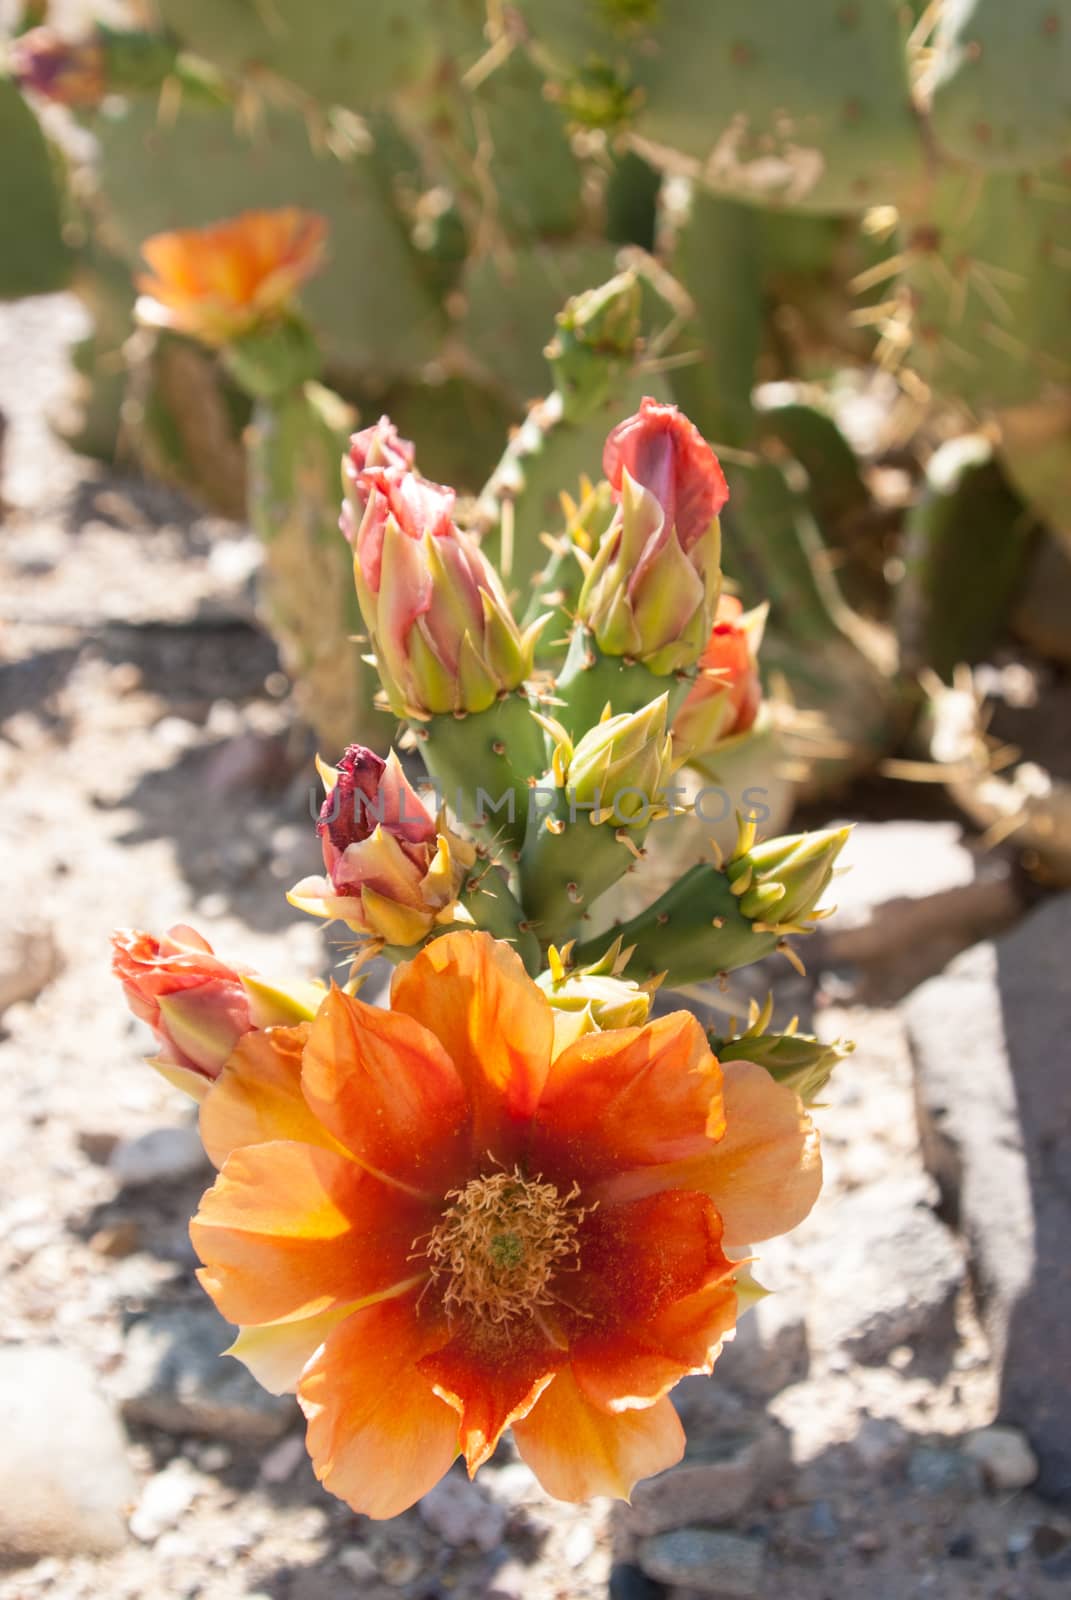 Sunlight on orange cactus flower by emattil